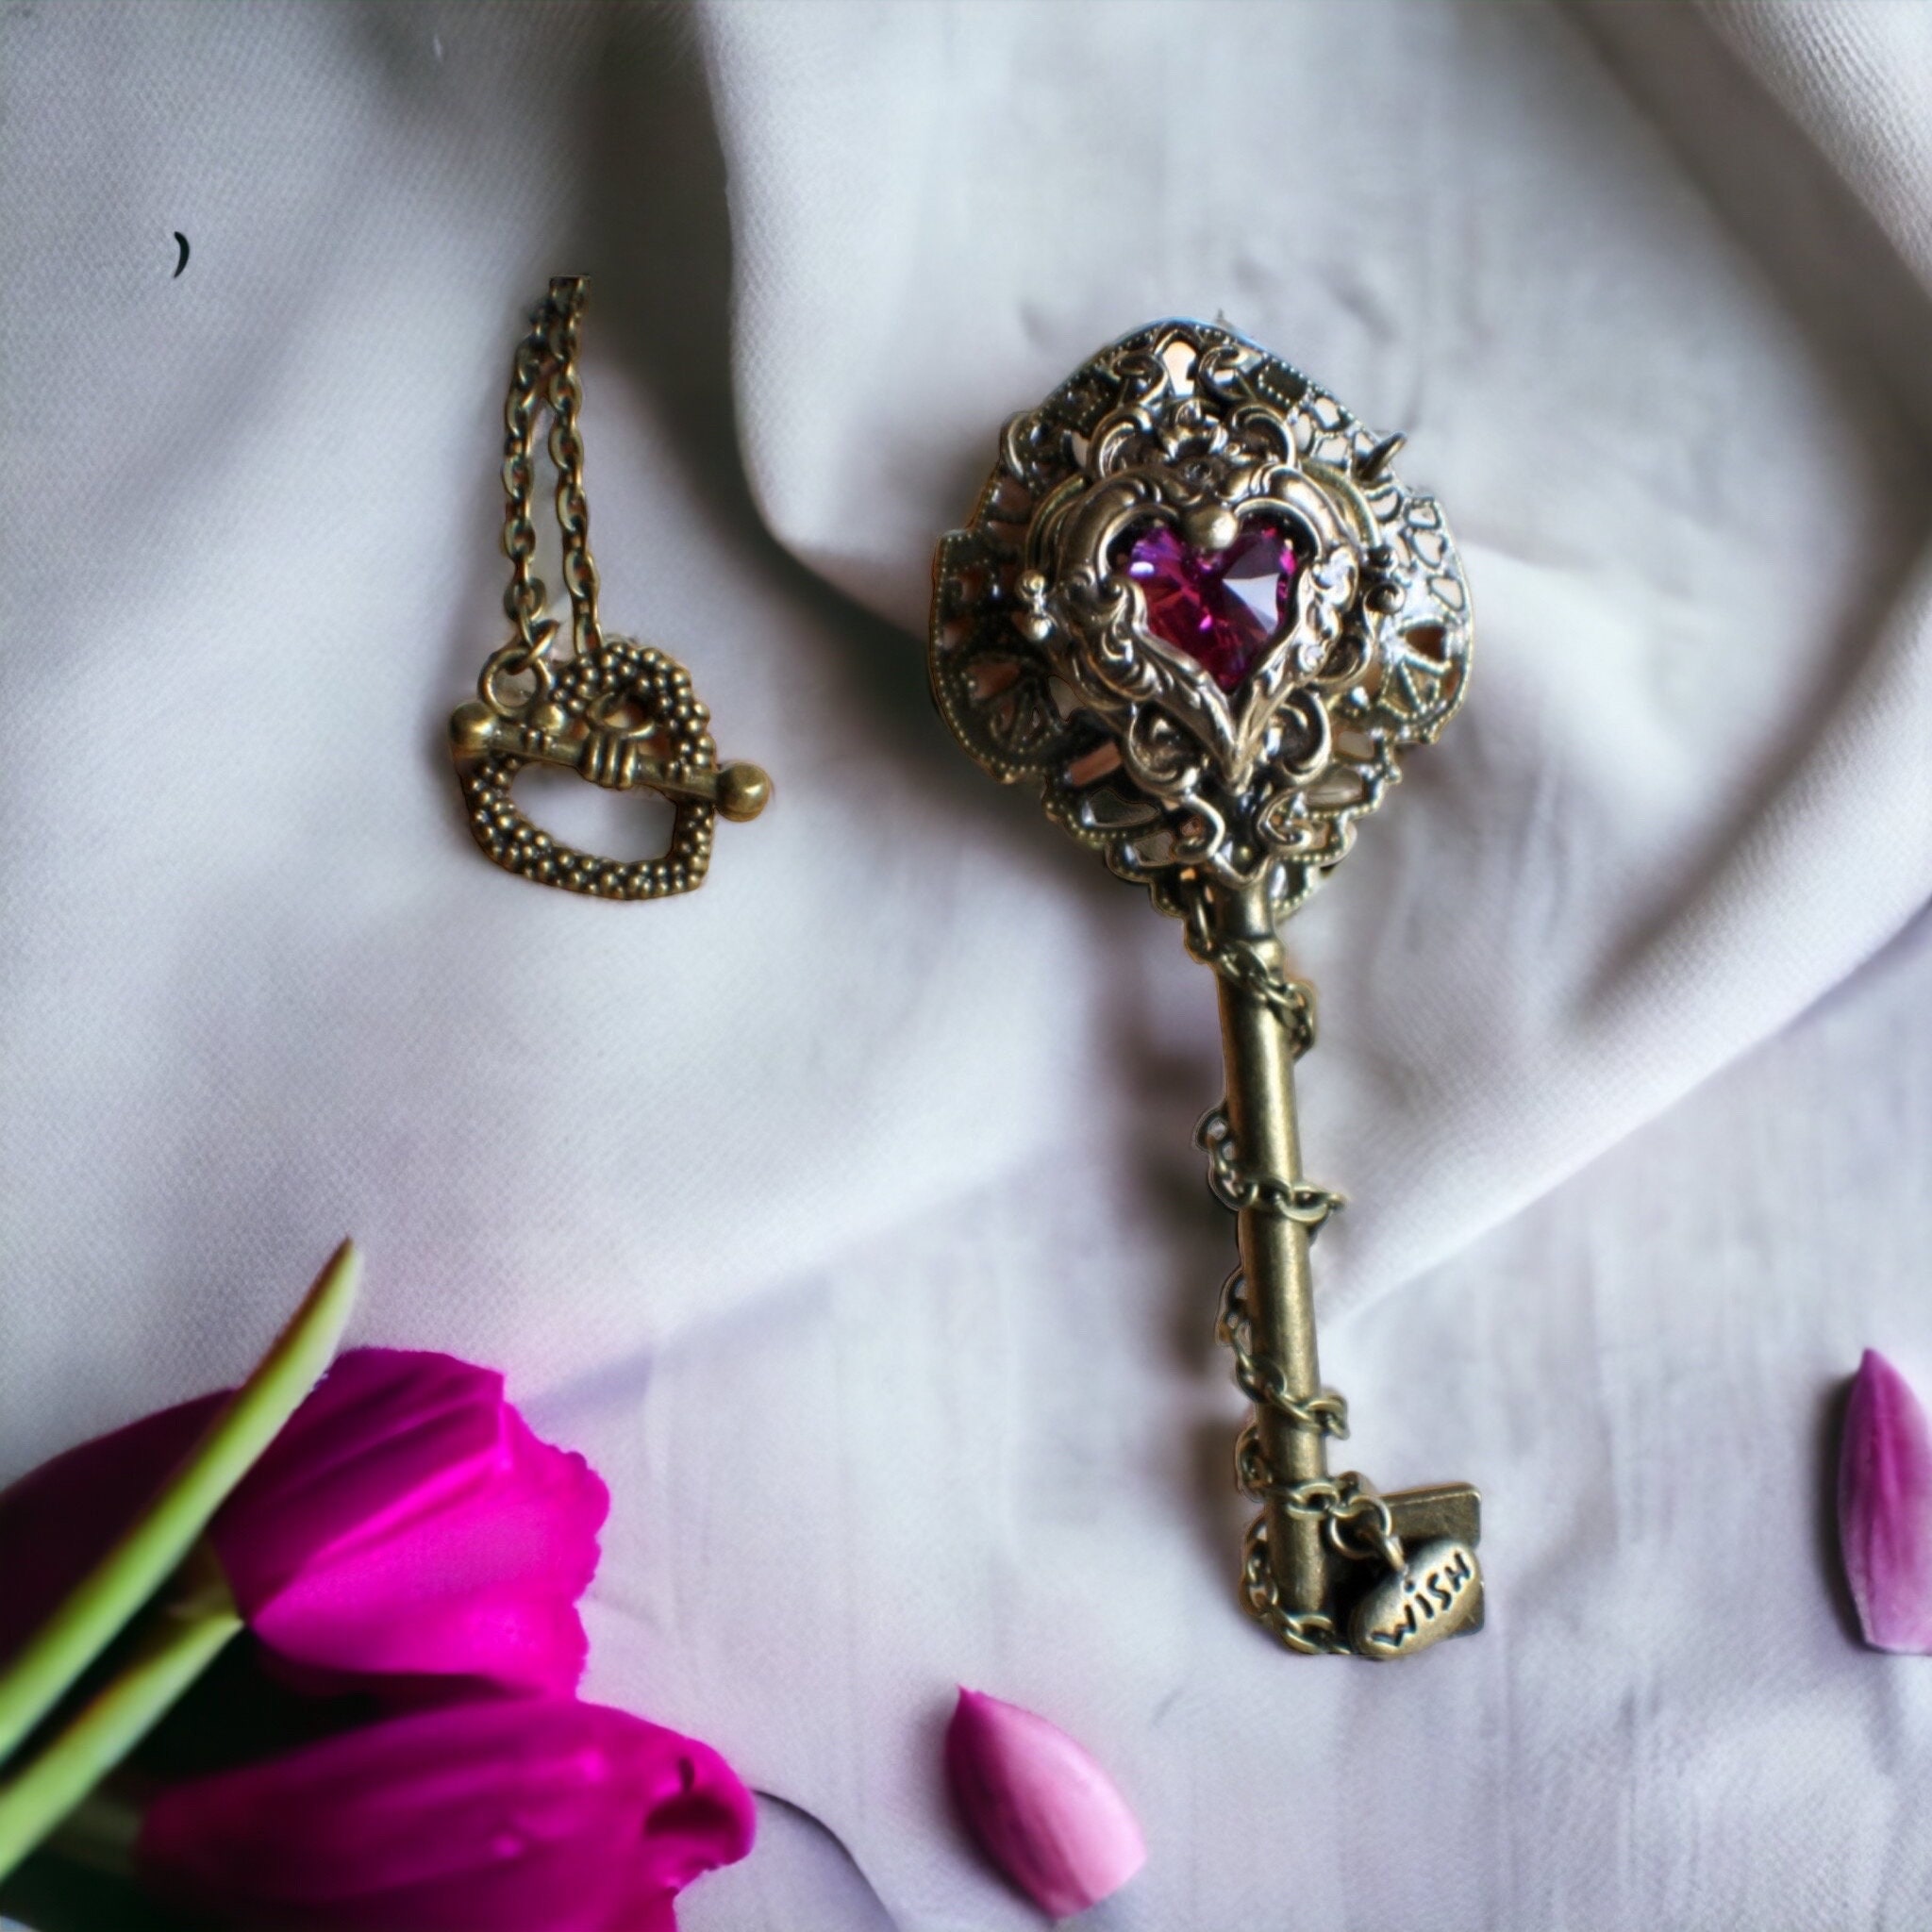 Lyumo Vintage Keys,69pcs Assorted Antique Vintage Bronze Skeleton Keys Fancy Heart Bow Jewelry, Keys Set